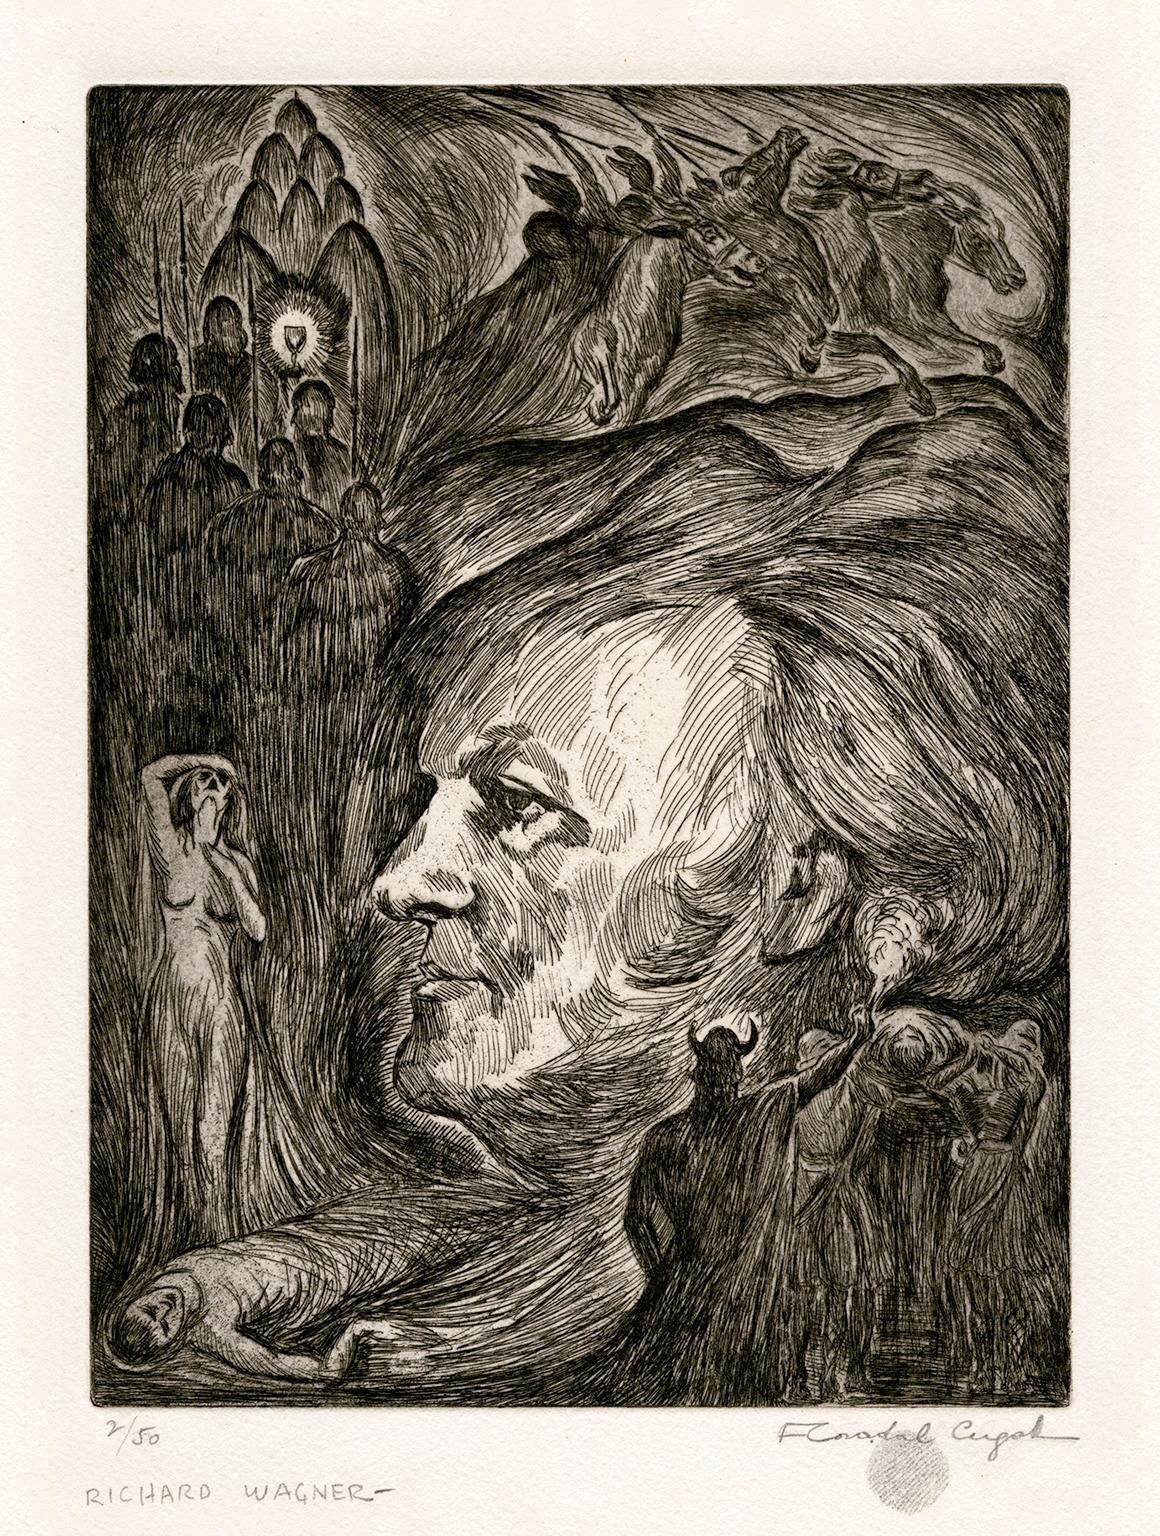 Francis Coradal-Cugat Portrait Print - 'Richard Wagner' — 1920s Portrait of the Composer